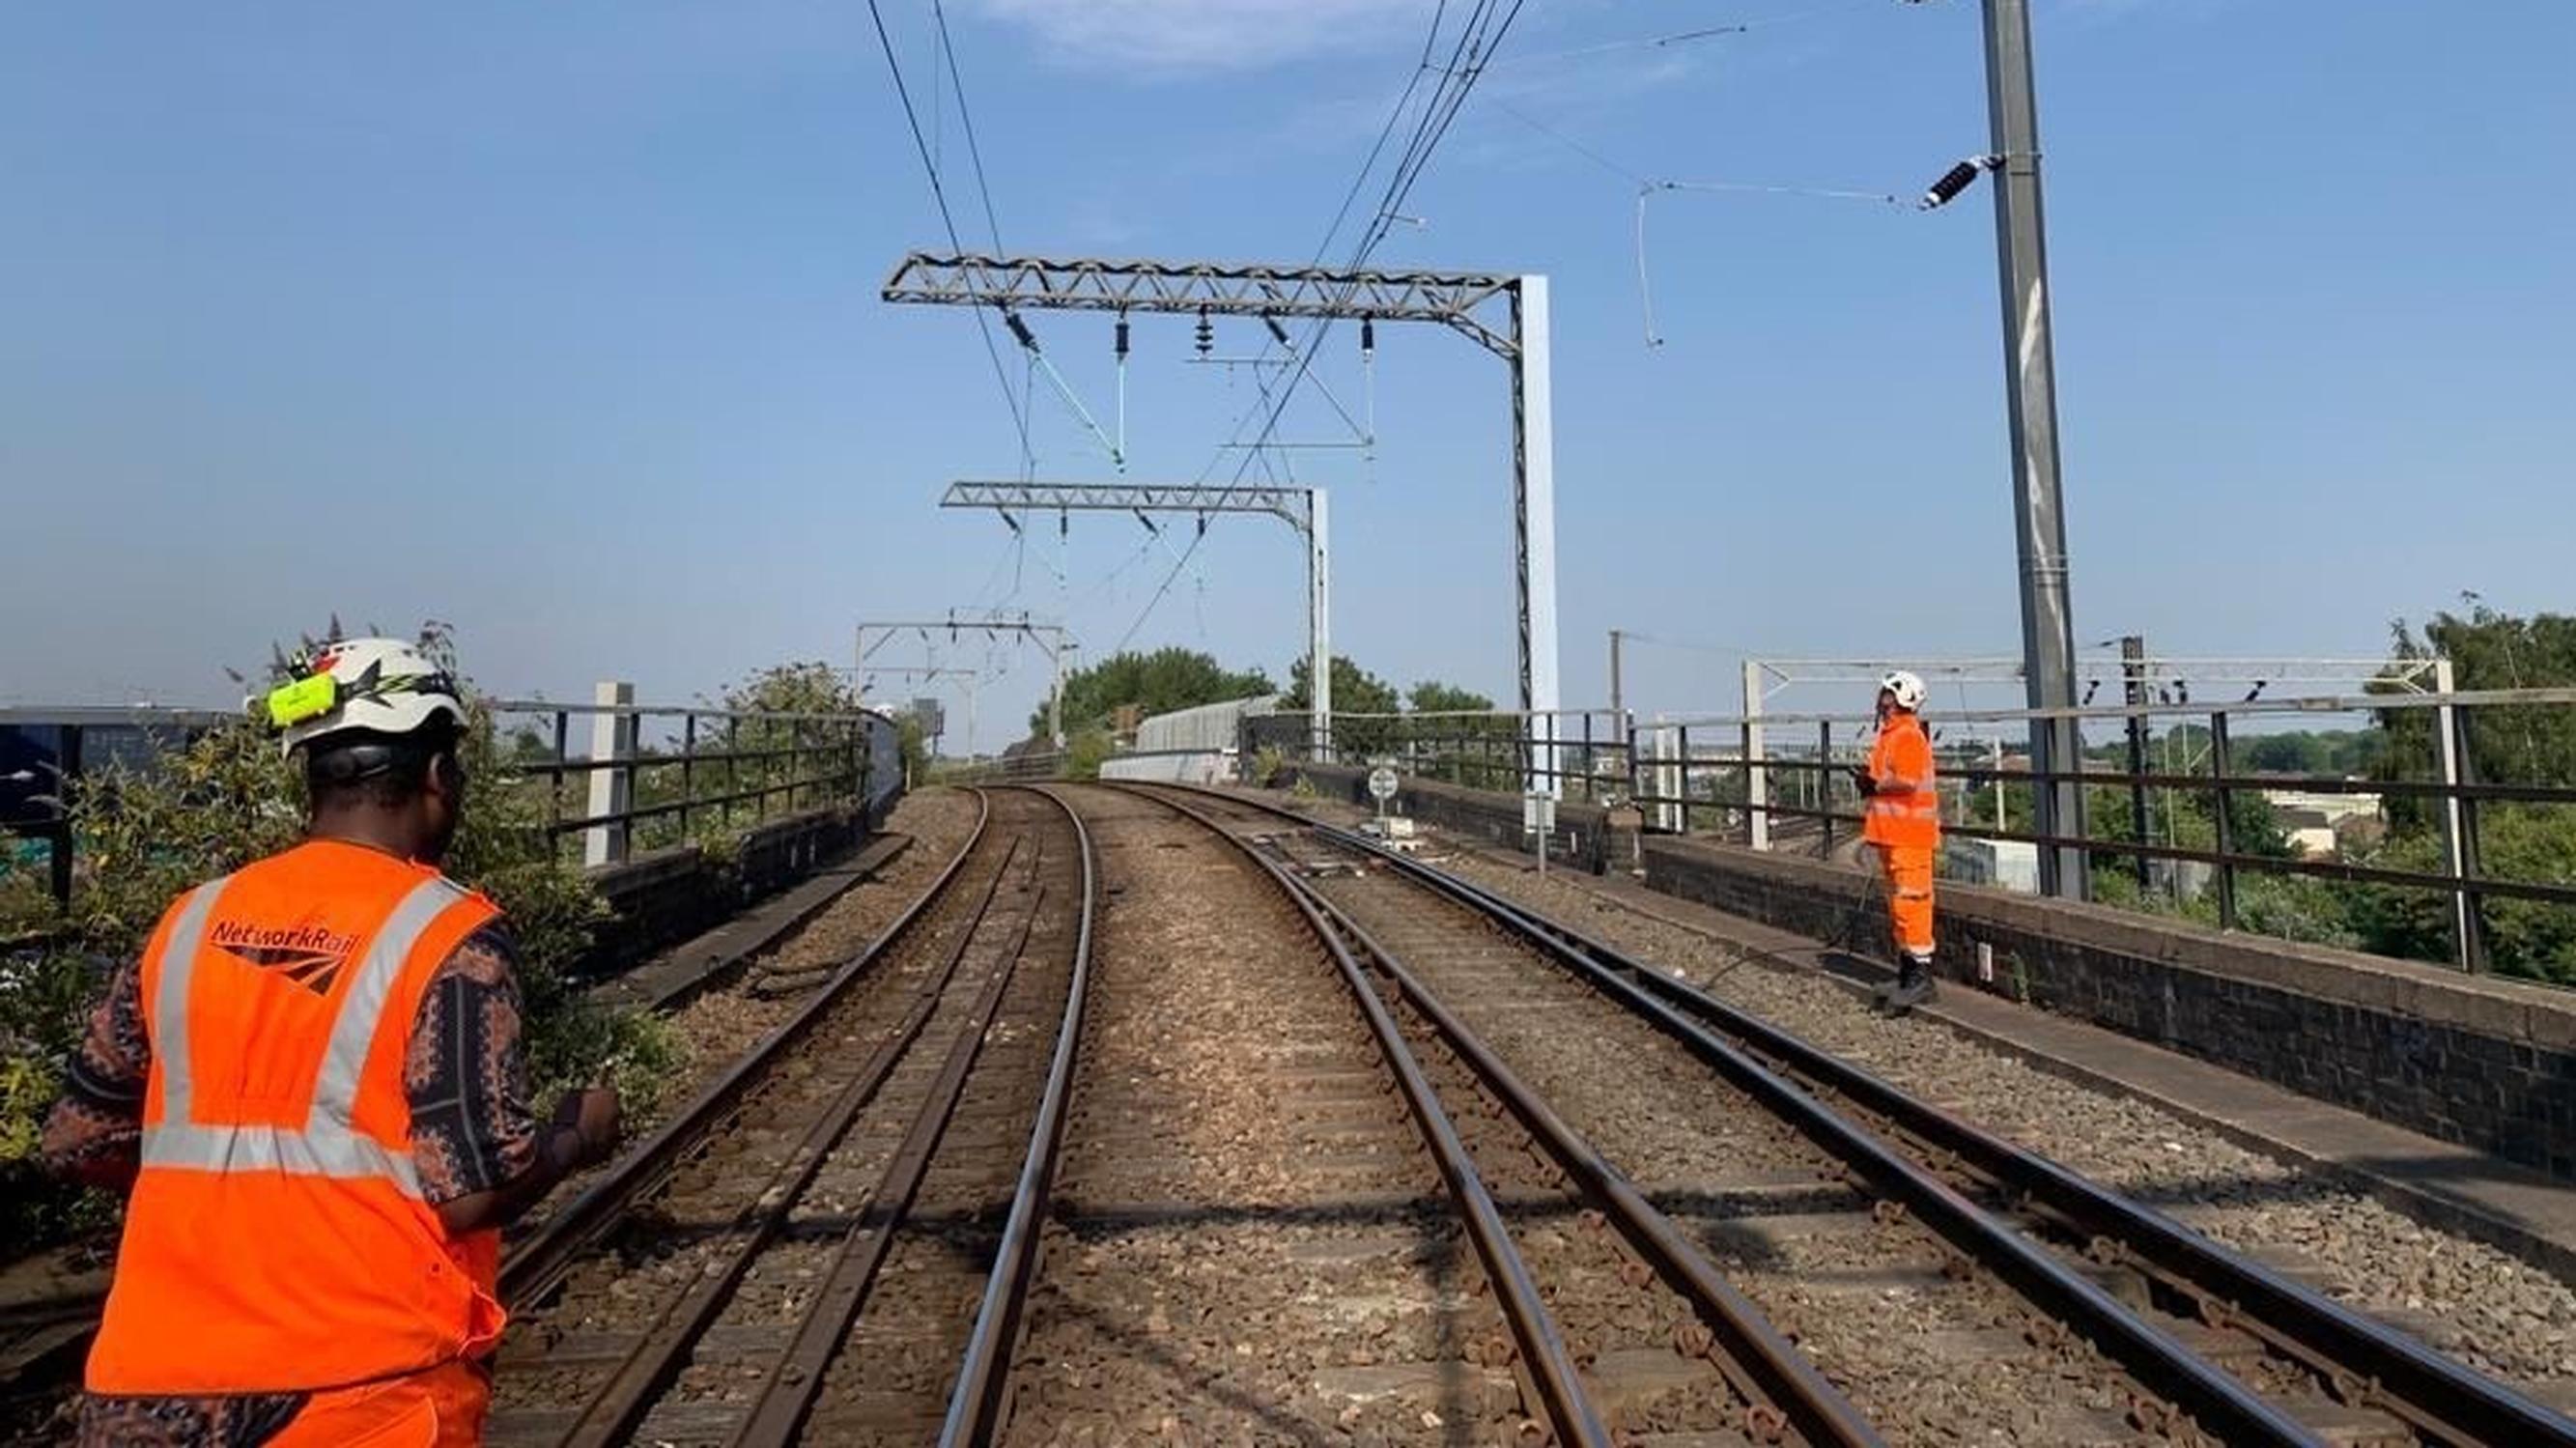 Overhead line repairs at Birmingham